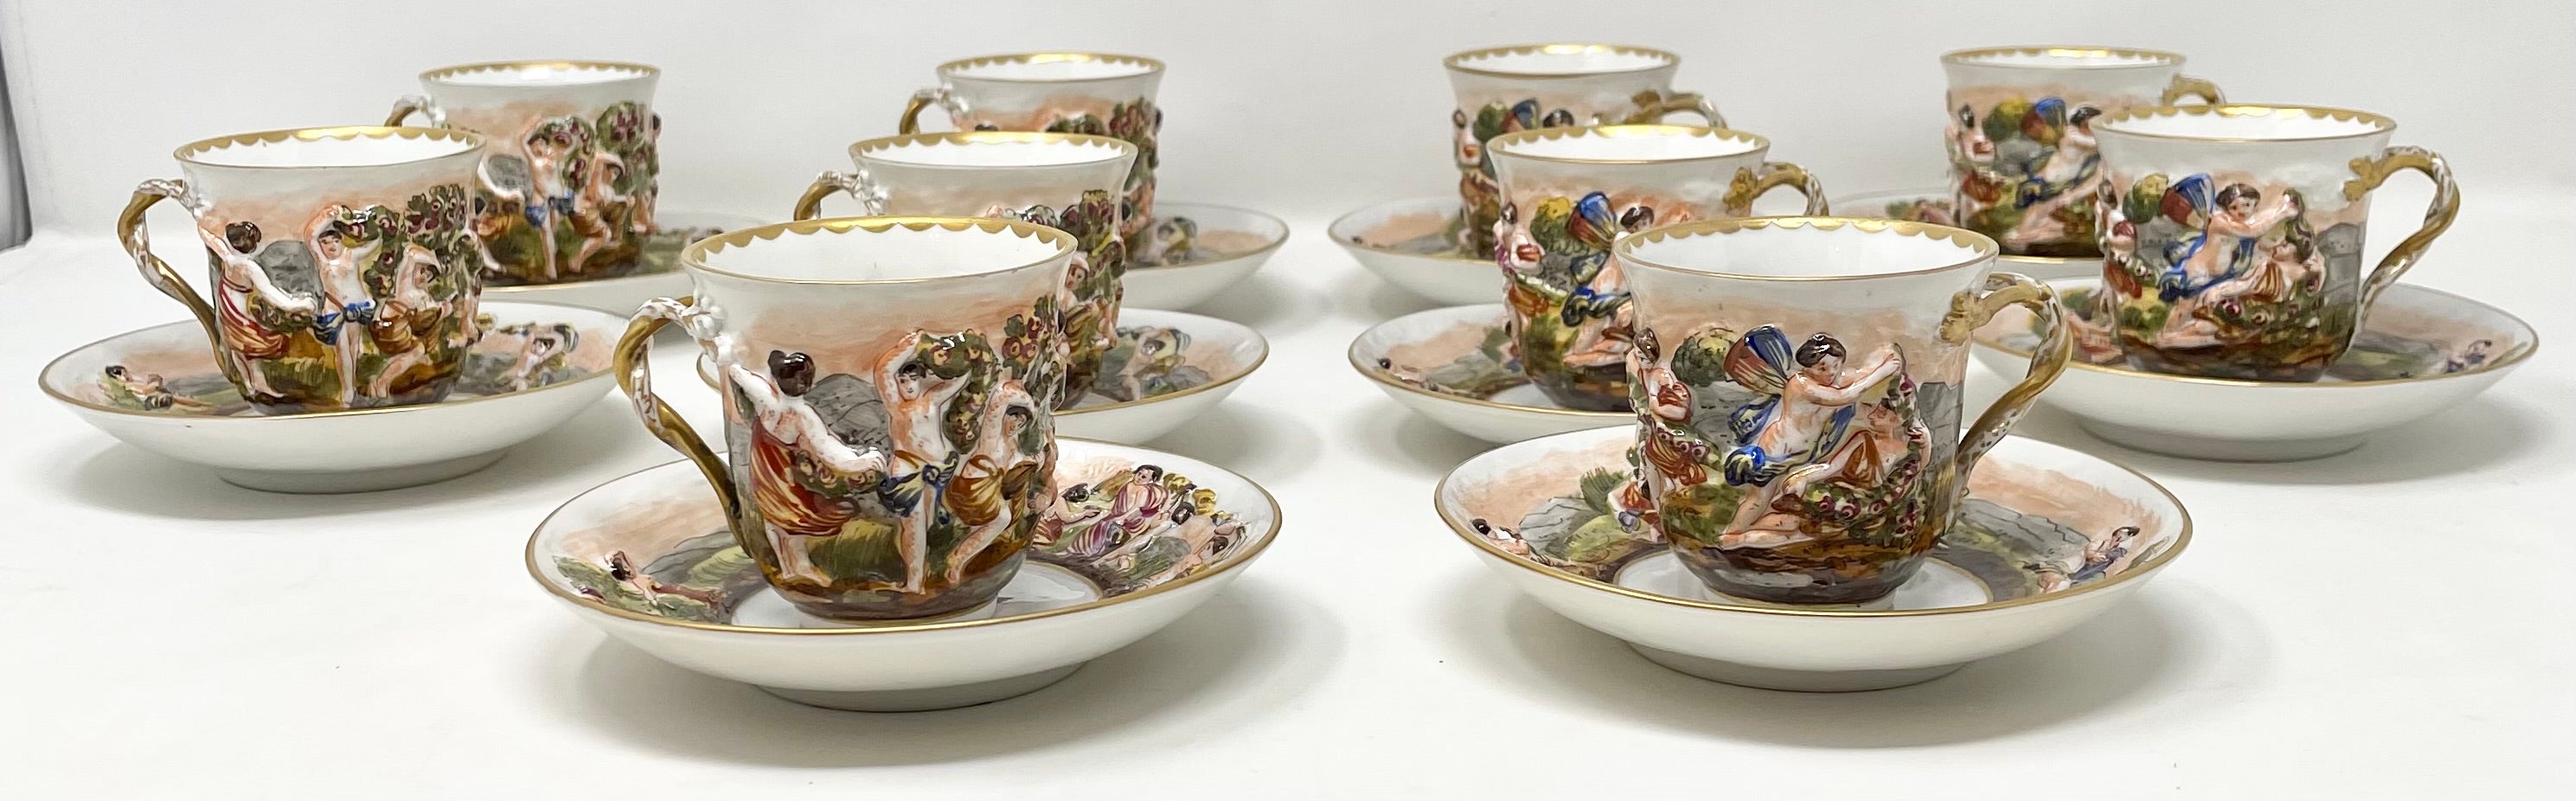 Antique Italian set of 10 Capo di Monte porcelain demi-tasse cups & saucers, circa 1880-1890.
Cup: 2.25